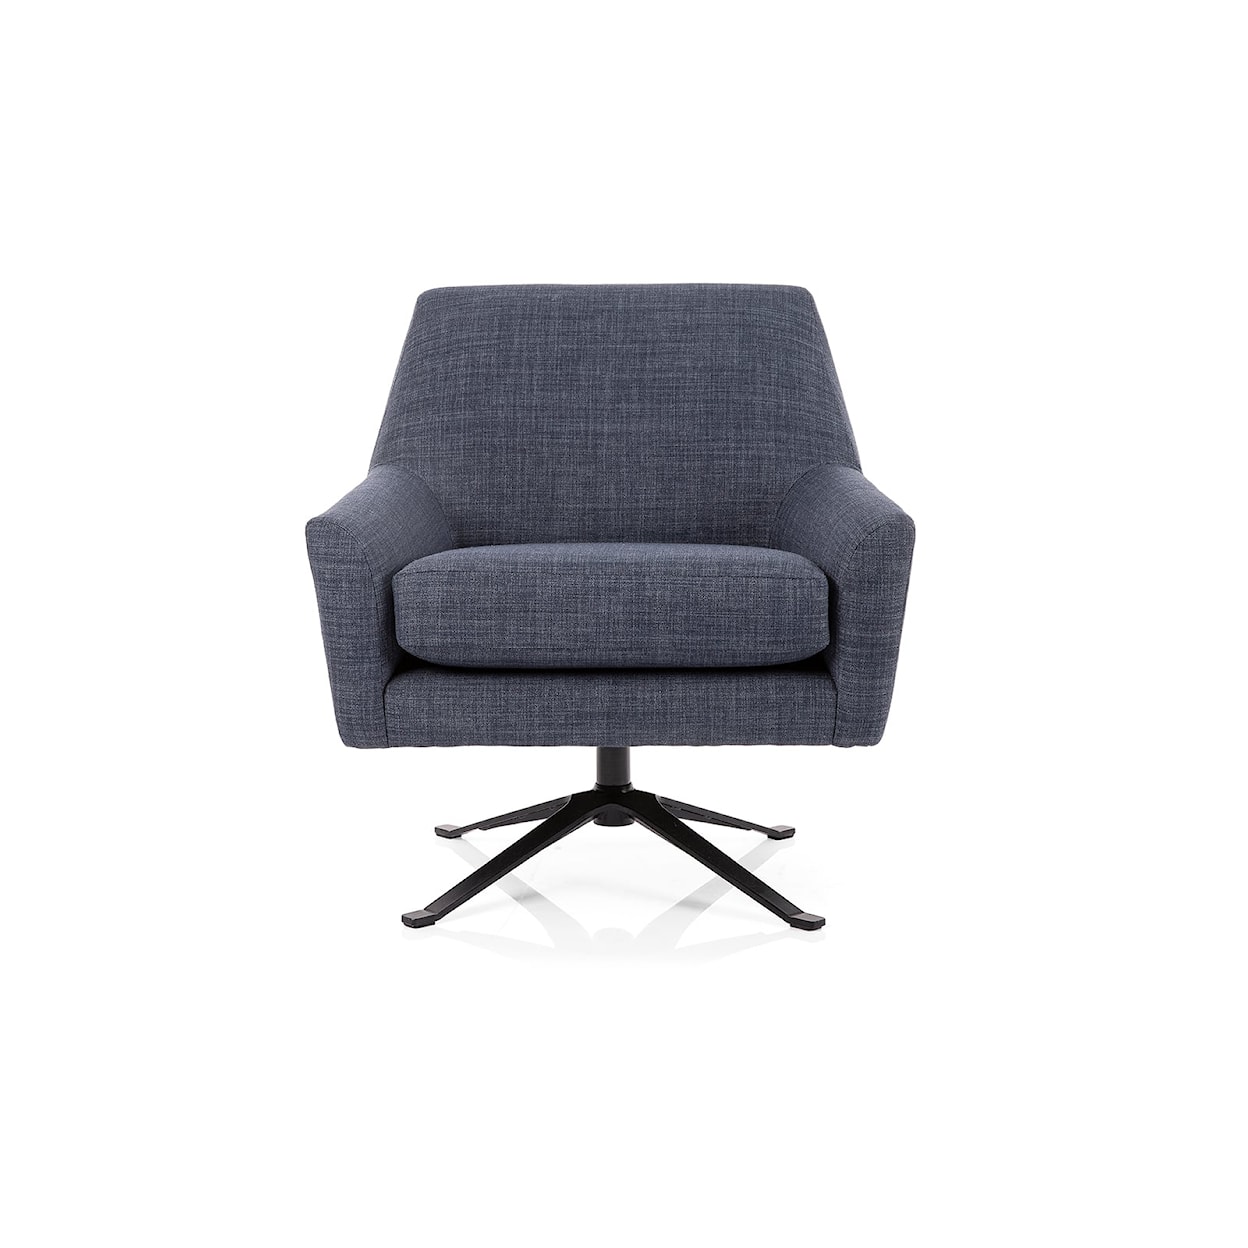 Decor-Rest 2097 Swivel Chair